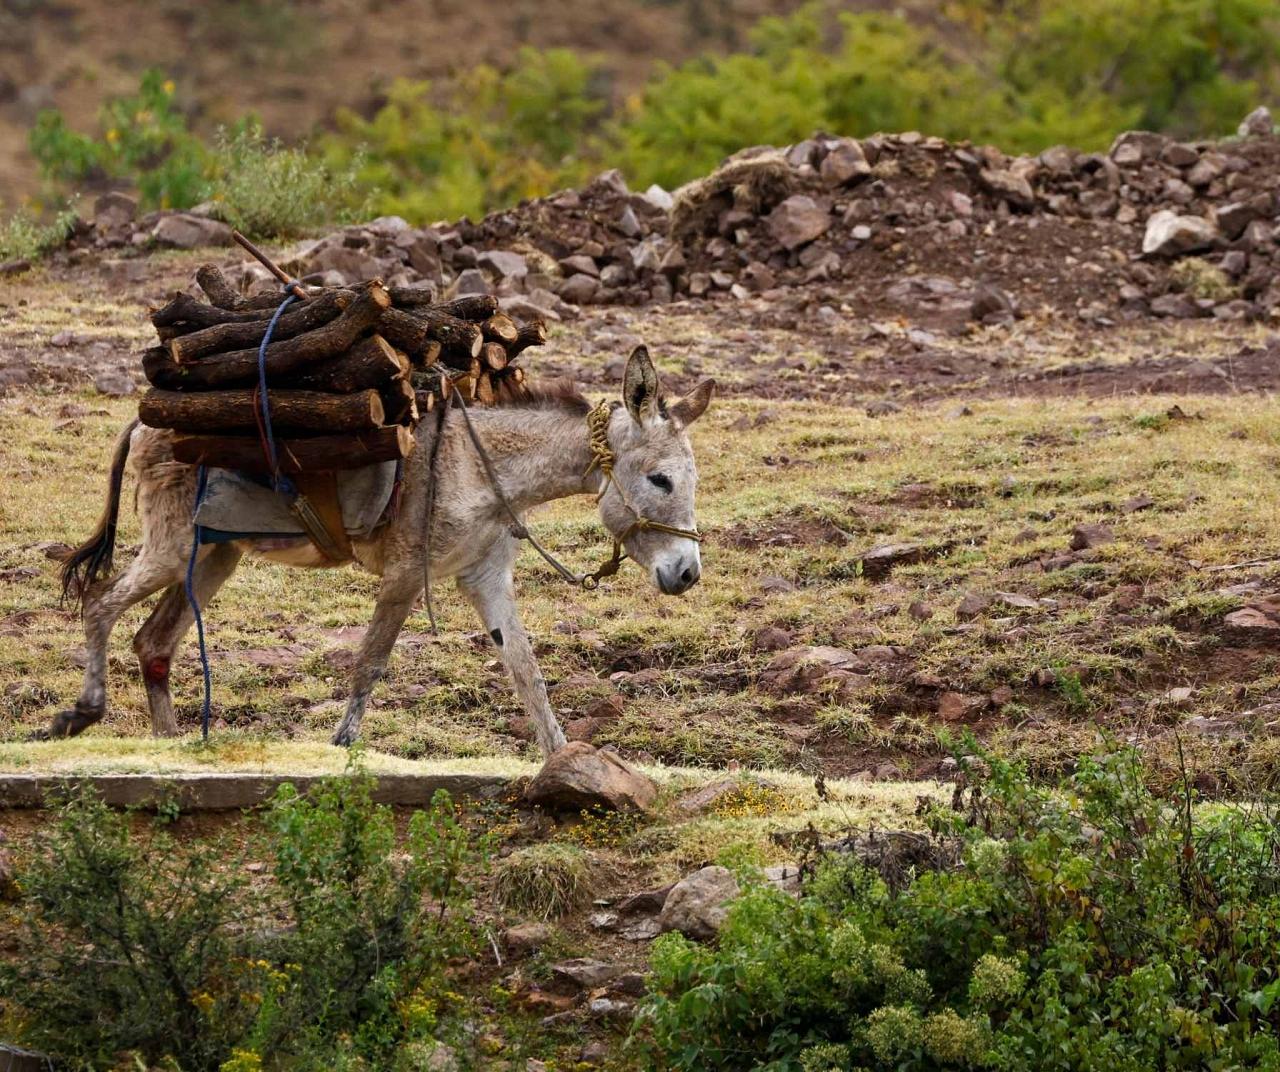 Donkey, Mexico nature tour, Naturalist Journeys